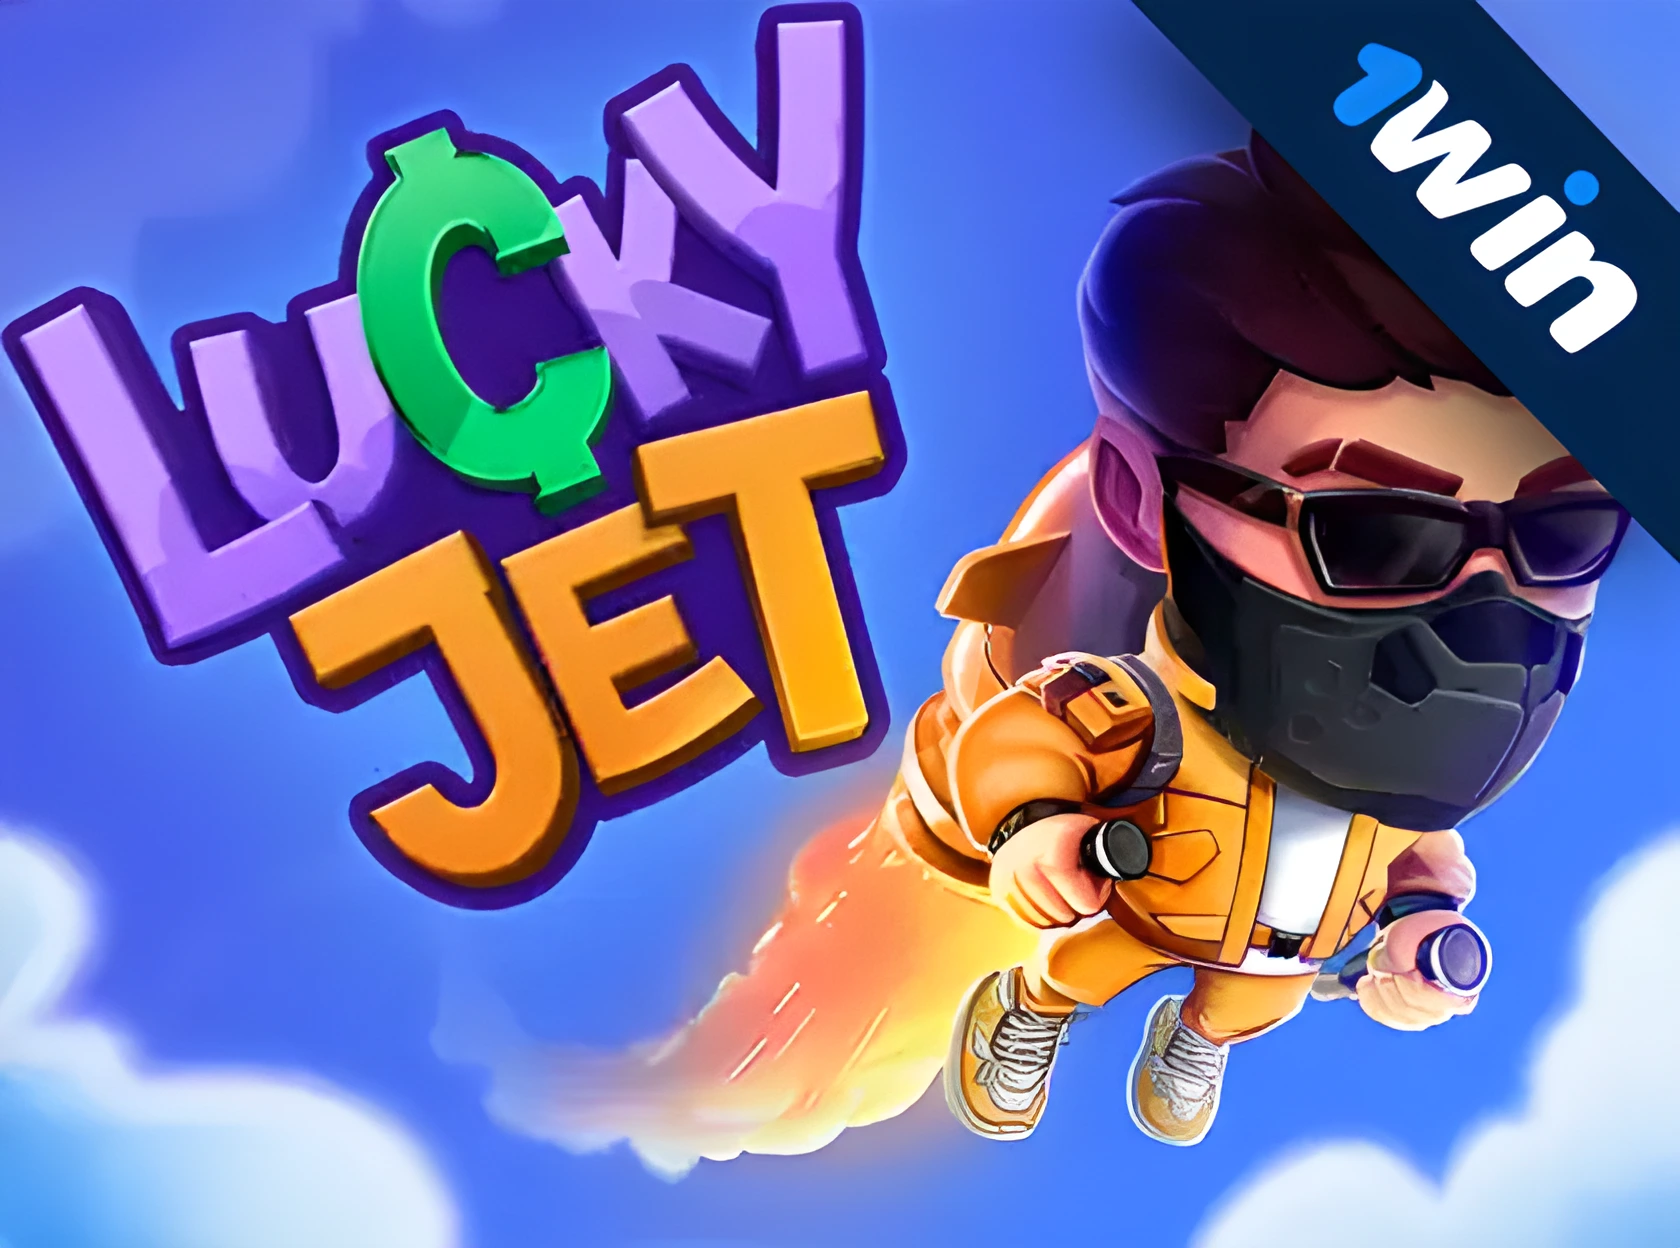 Lucky Jet - 1win рдкрд░ рдореВрд▓ рд╕реНрд▓реЙрдЯ